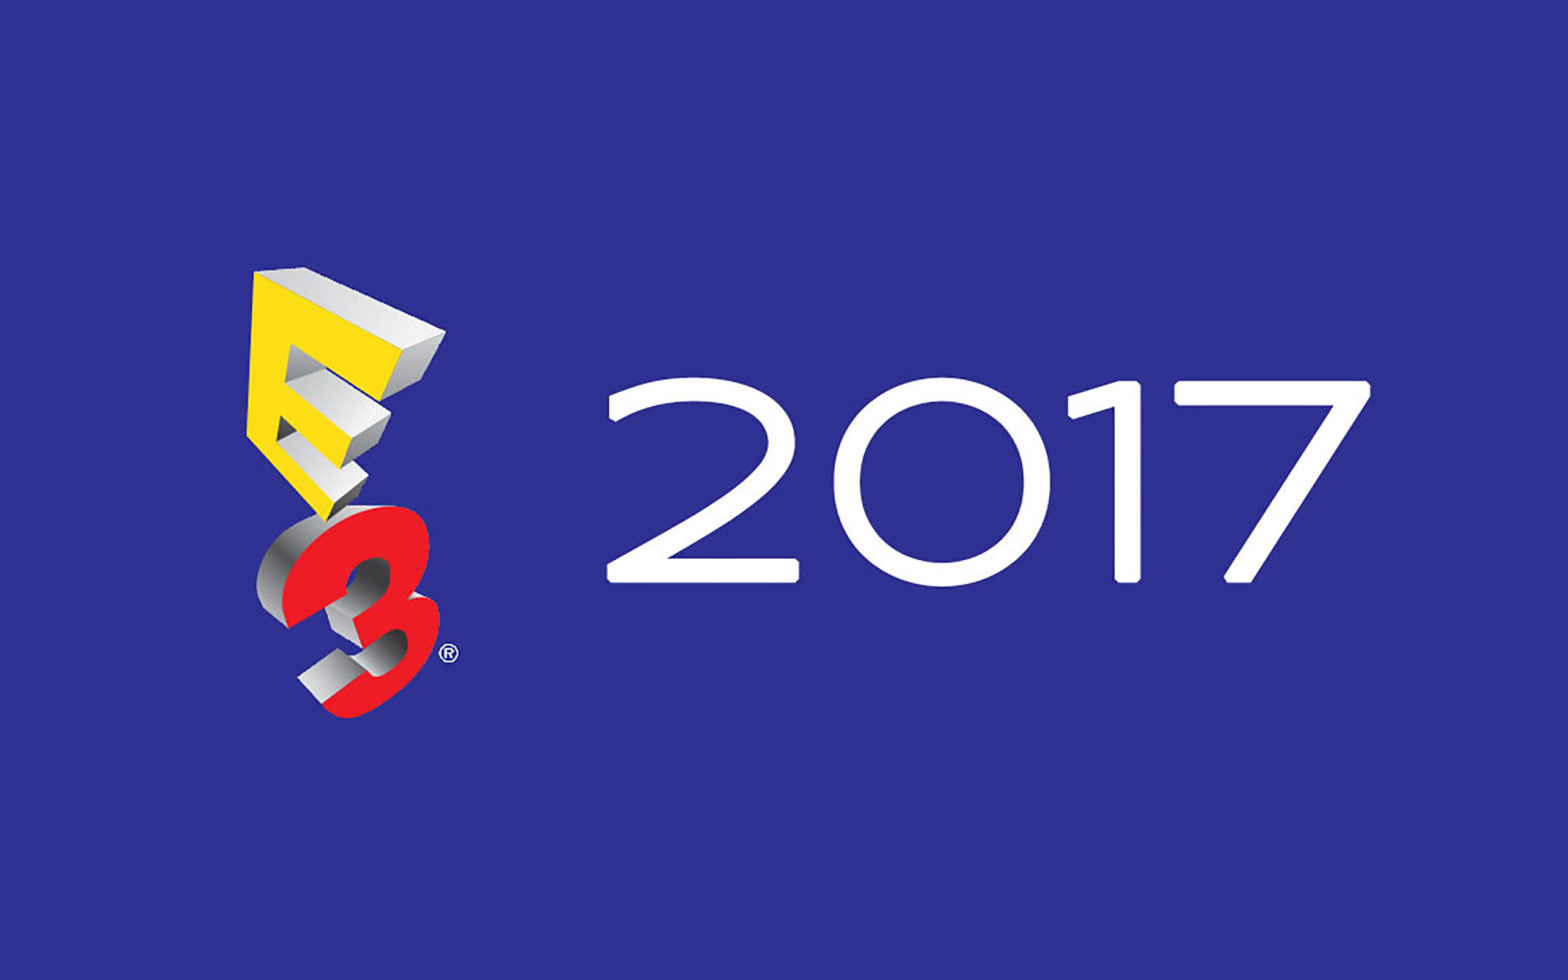 E3 2017